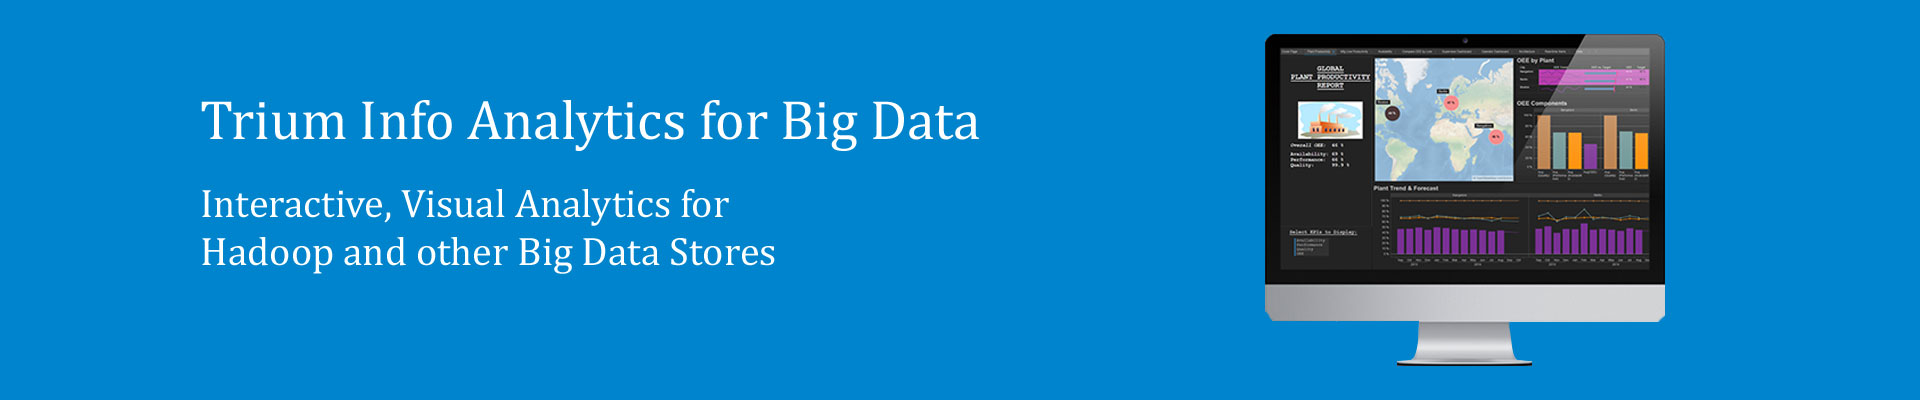 Big data process